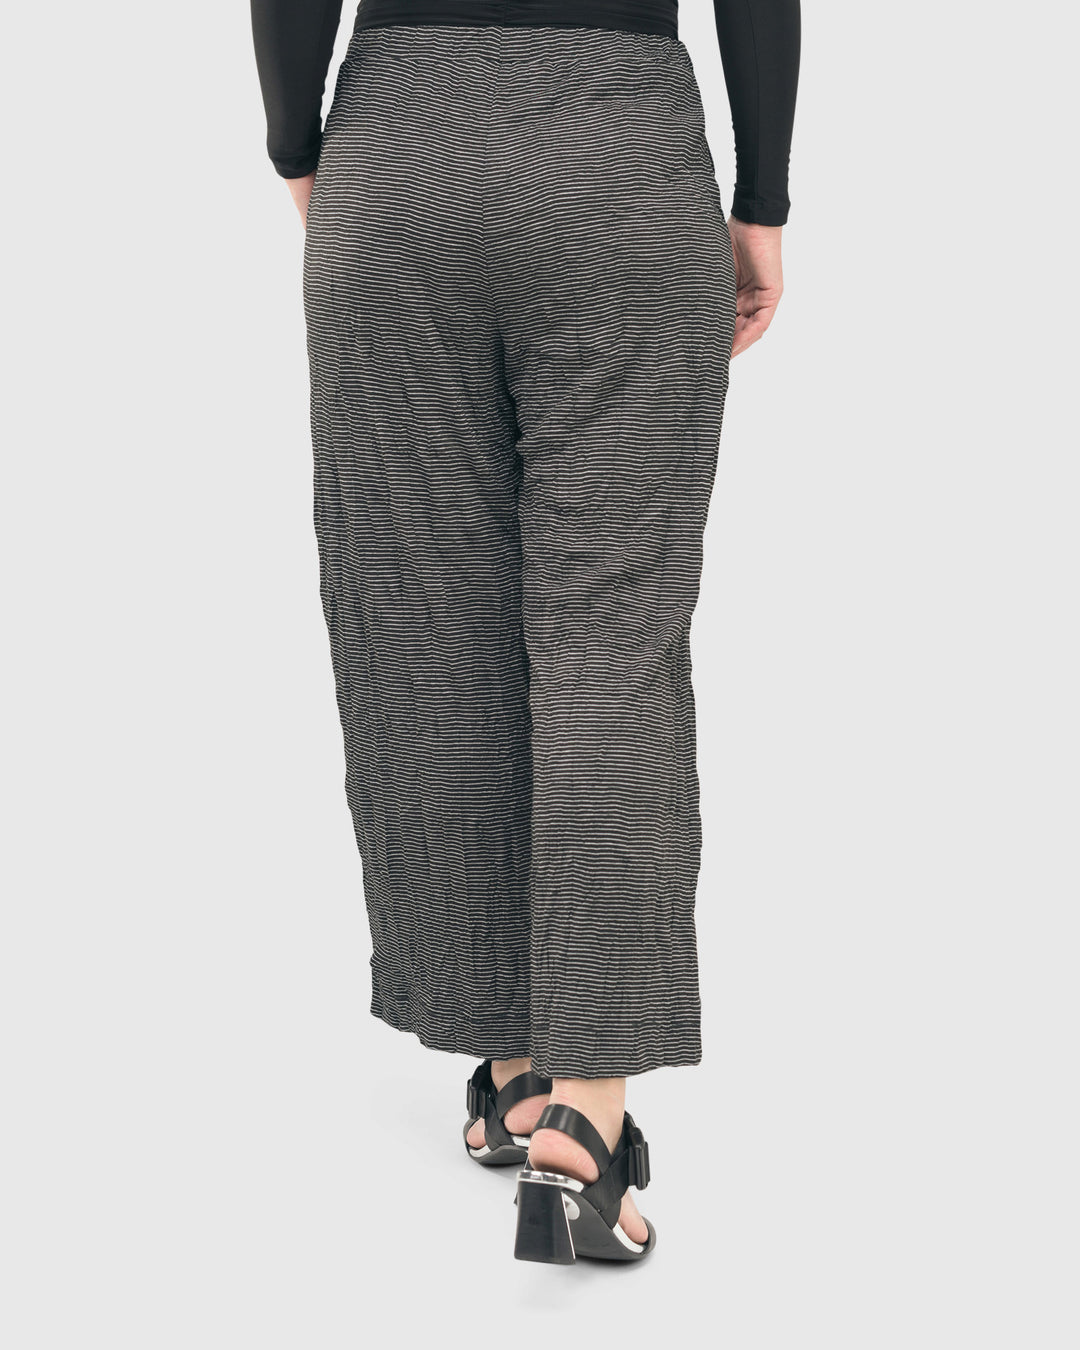 Black Crinkle Pants for older women